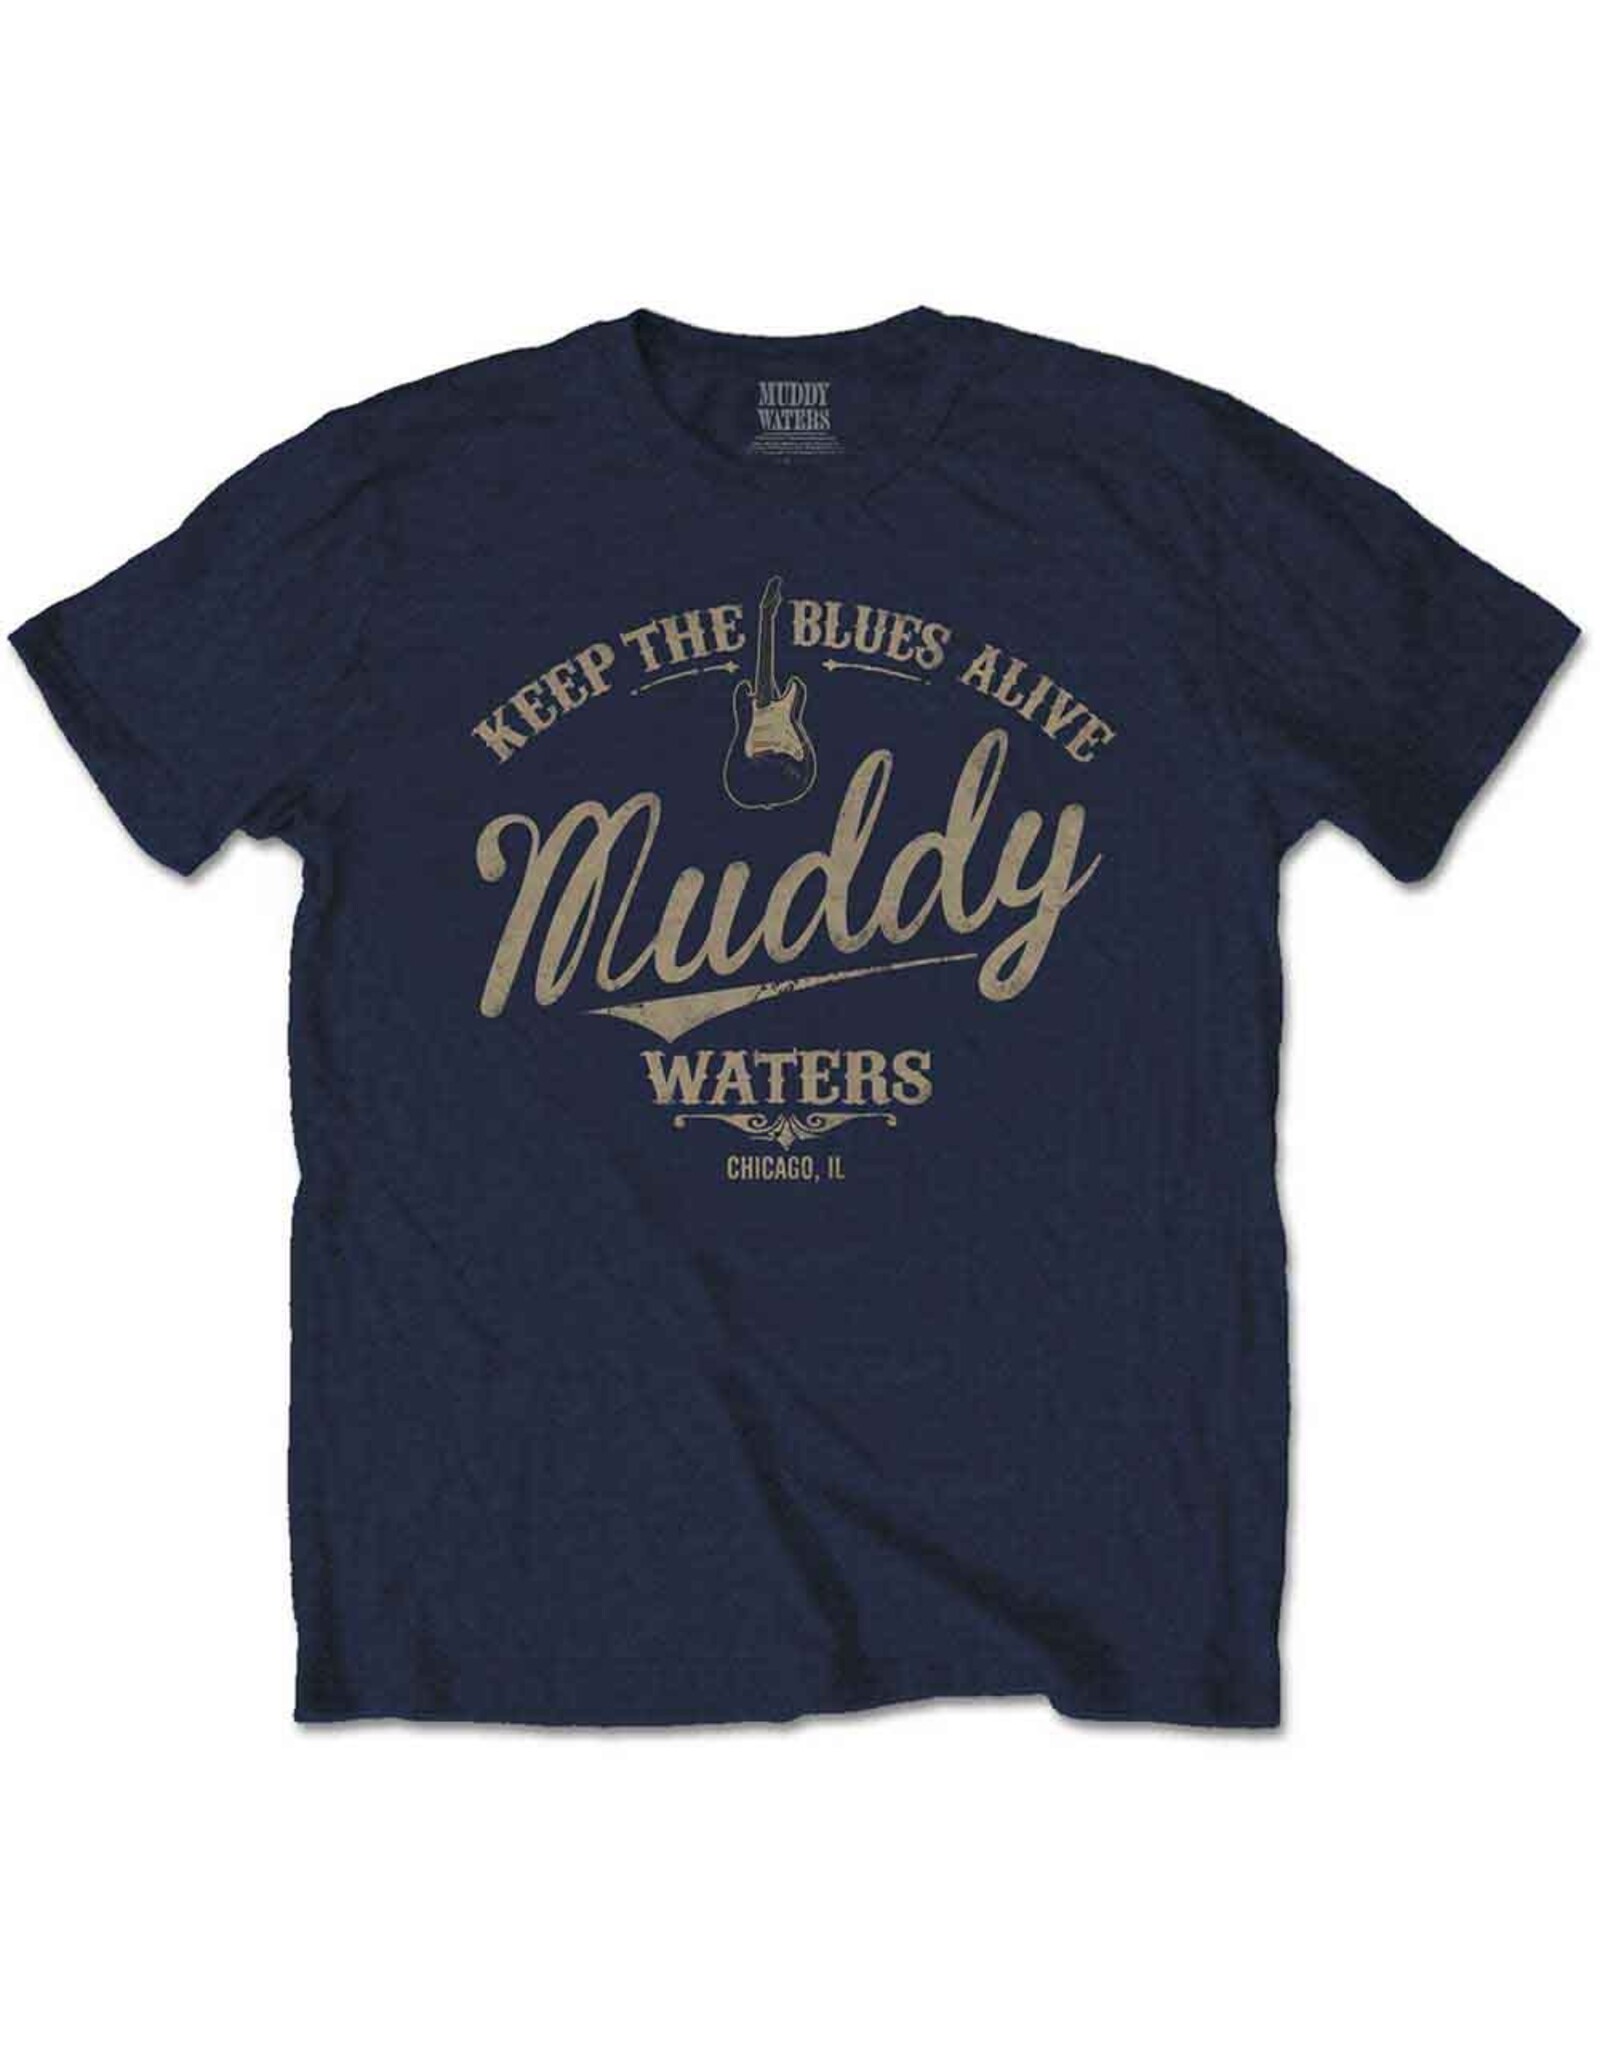 Muddy Waters / Keep The Blues Alive Tee